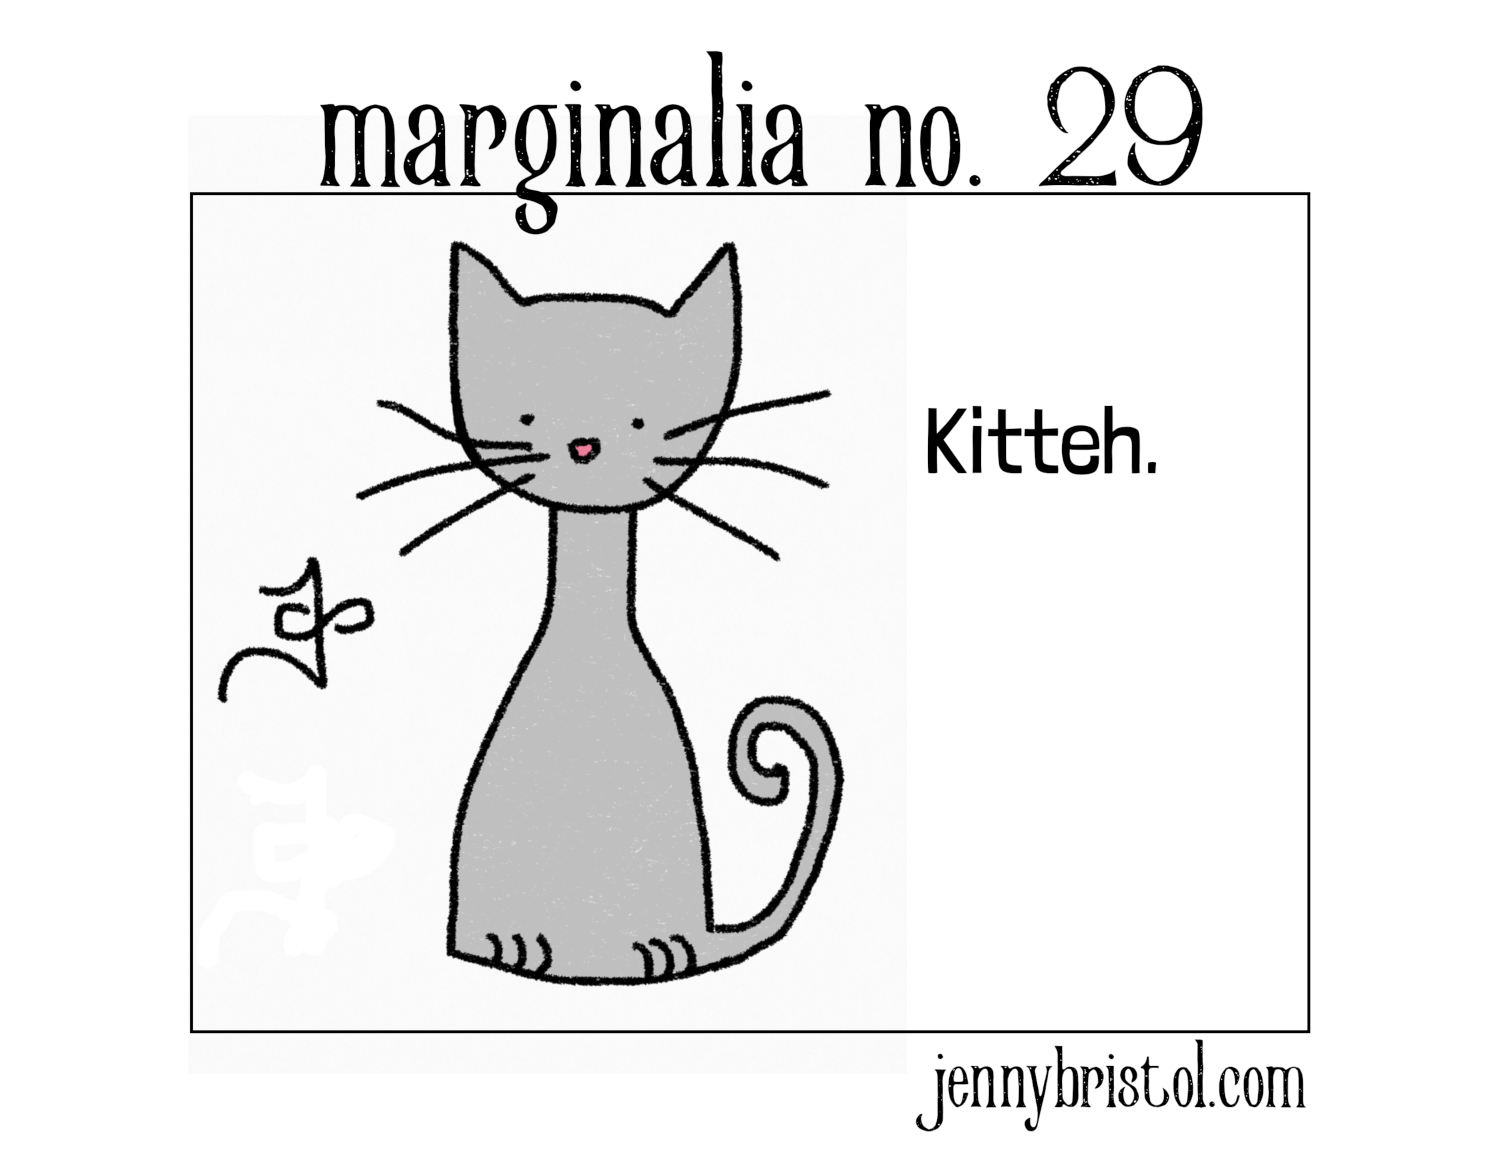 Marginalia no. 29 to post